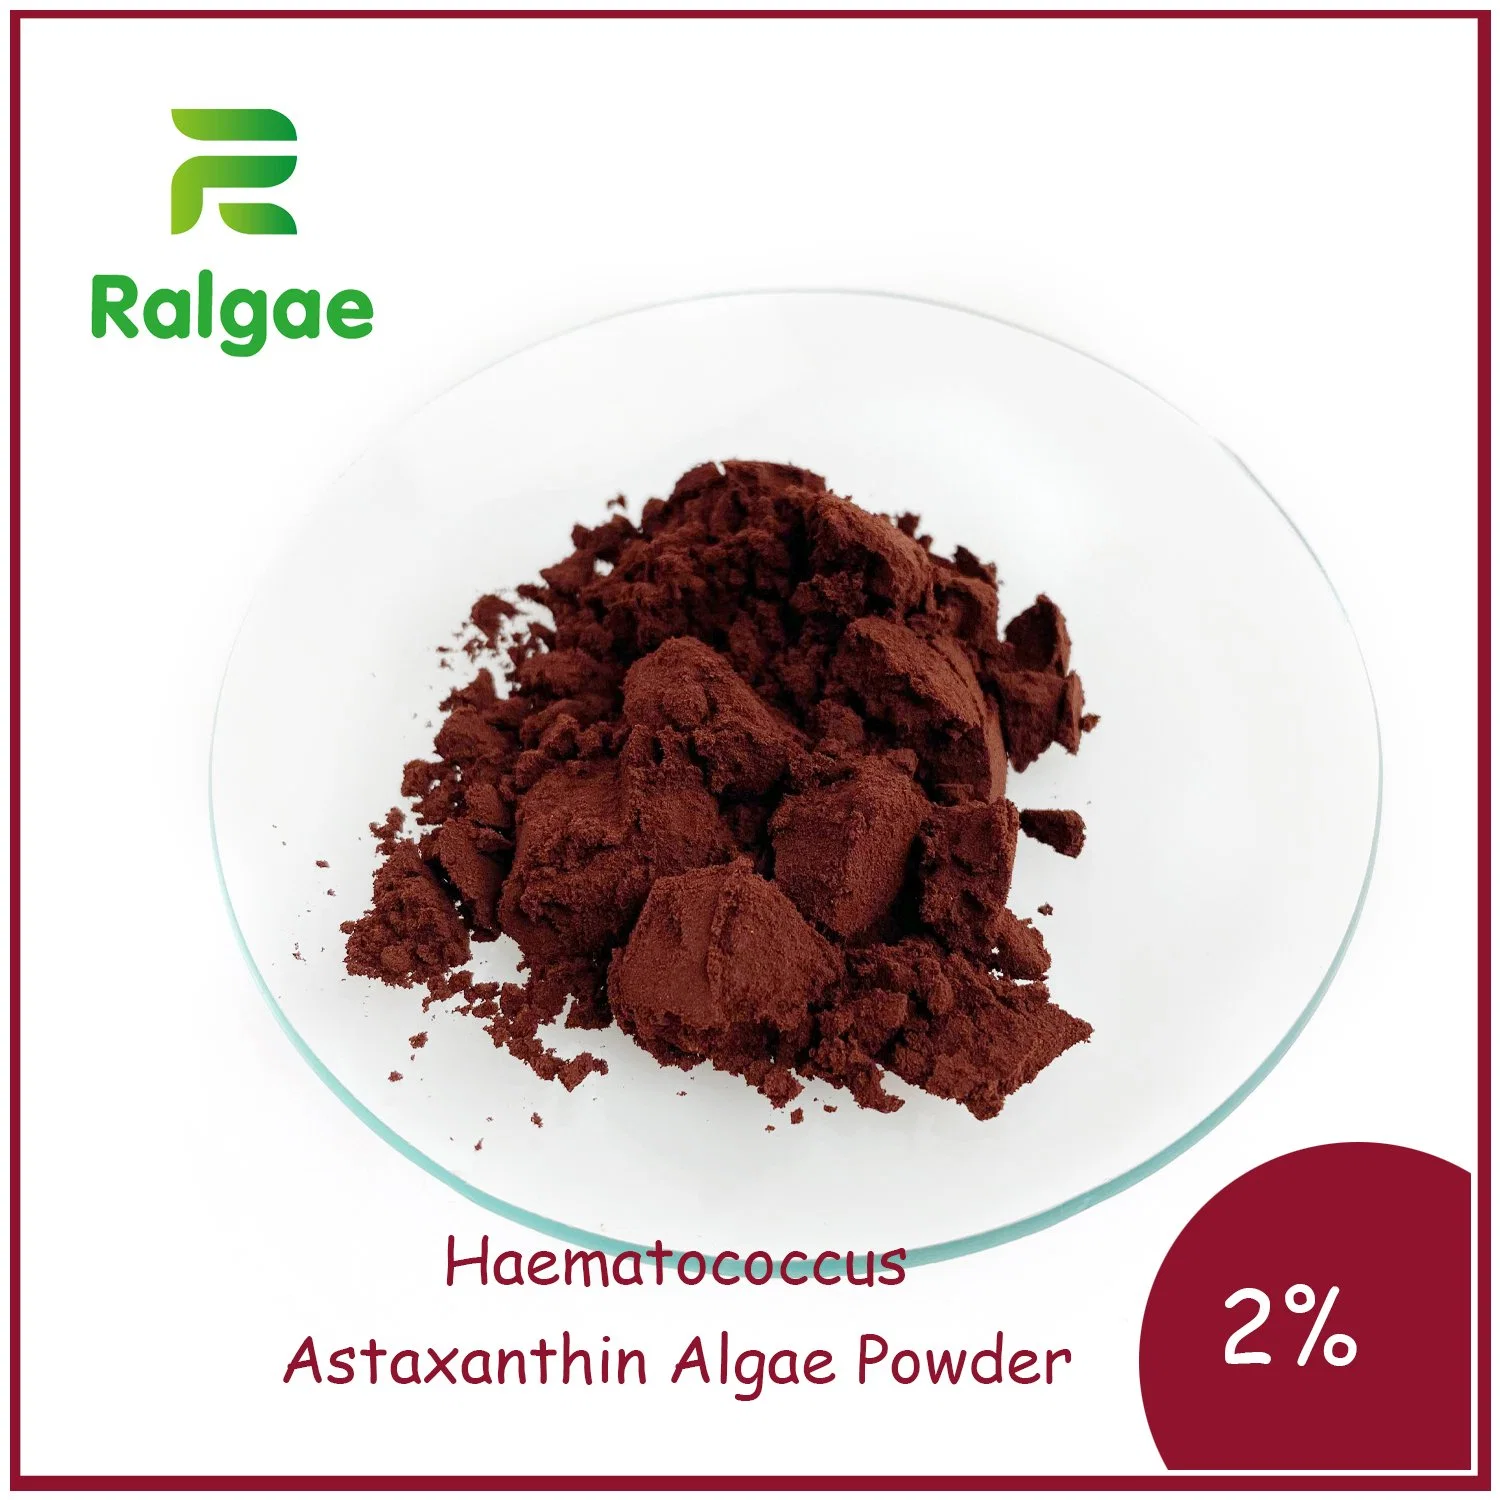 Feed Grade Haematooccus Algae Powder for Animal Feed Astaxanthin Additive